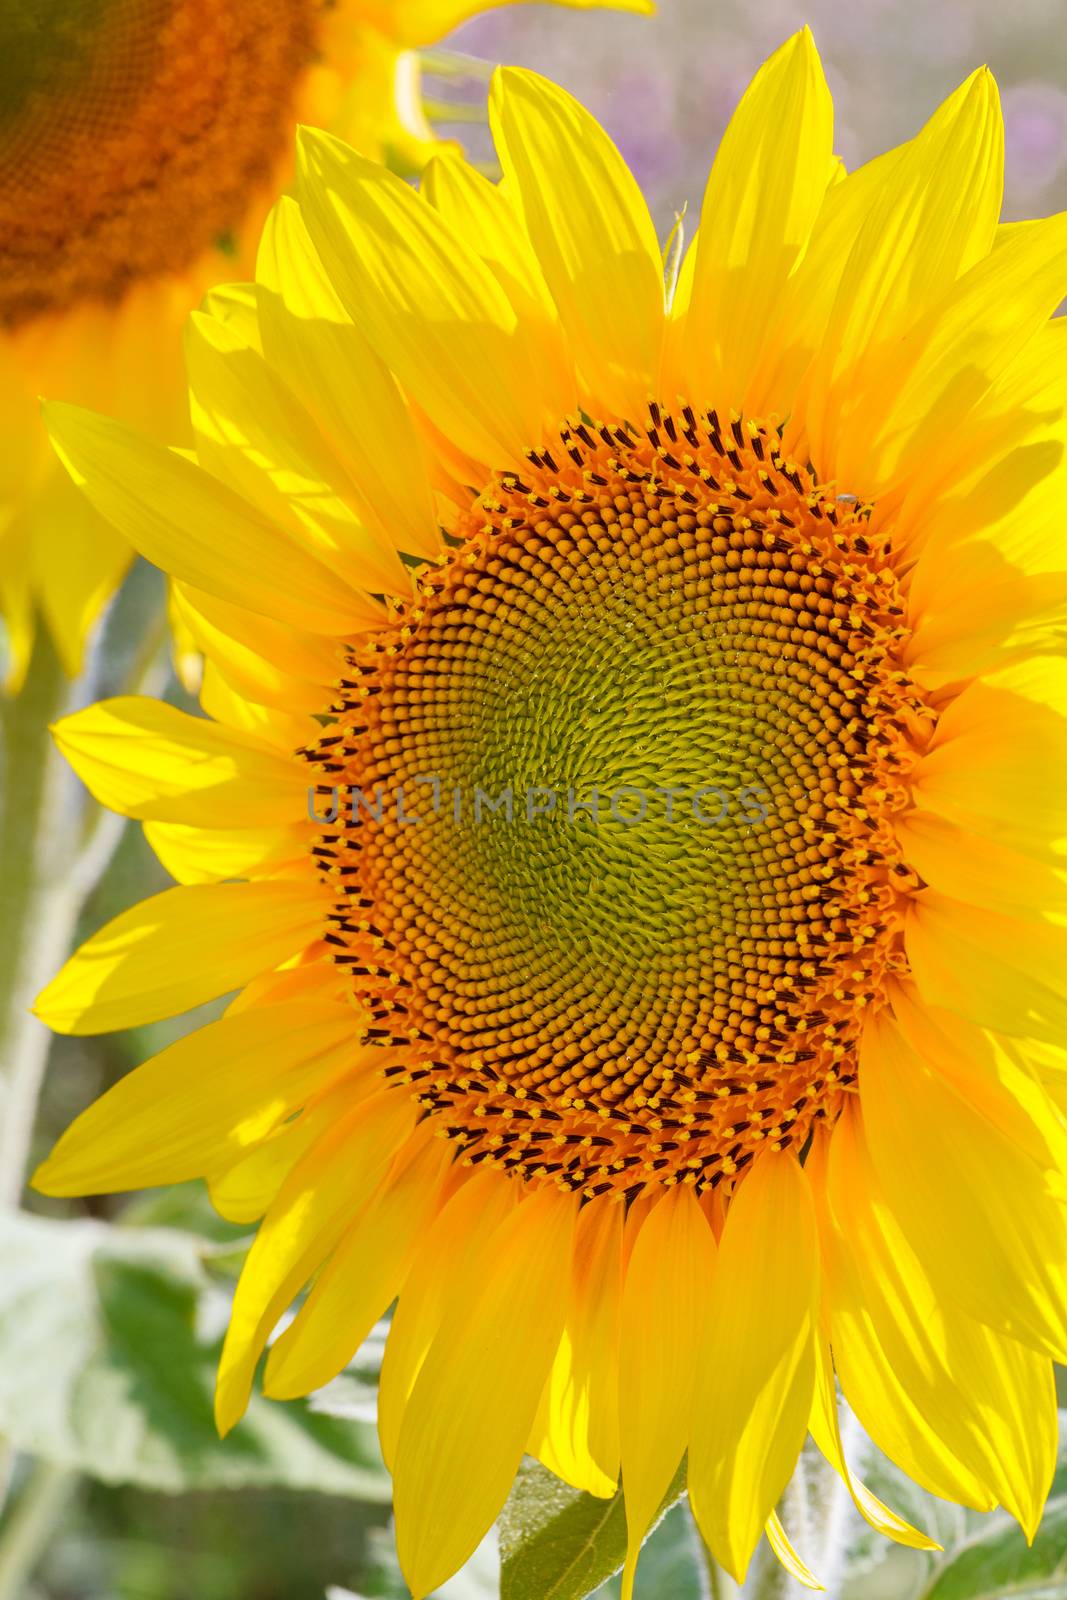 Flower of sunflower close-up